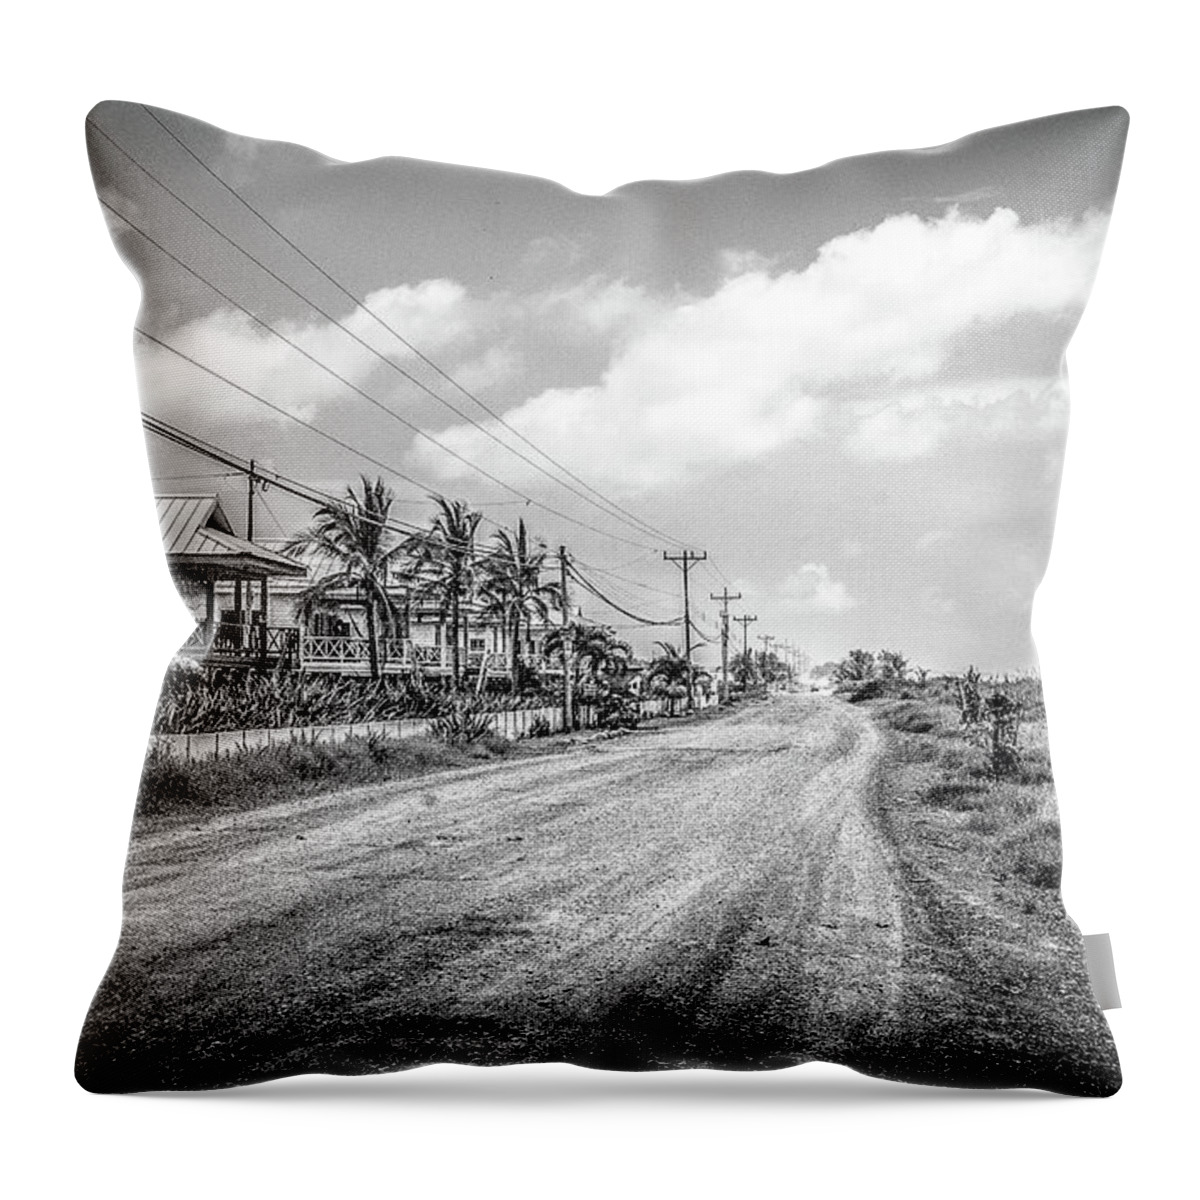 Beach Throw Pillow featuring the photograph Beach Road by Tito Slack